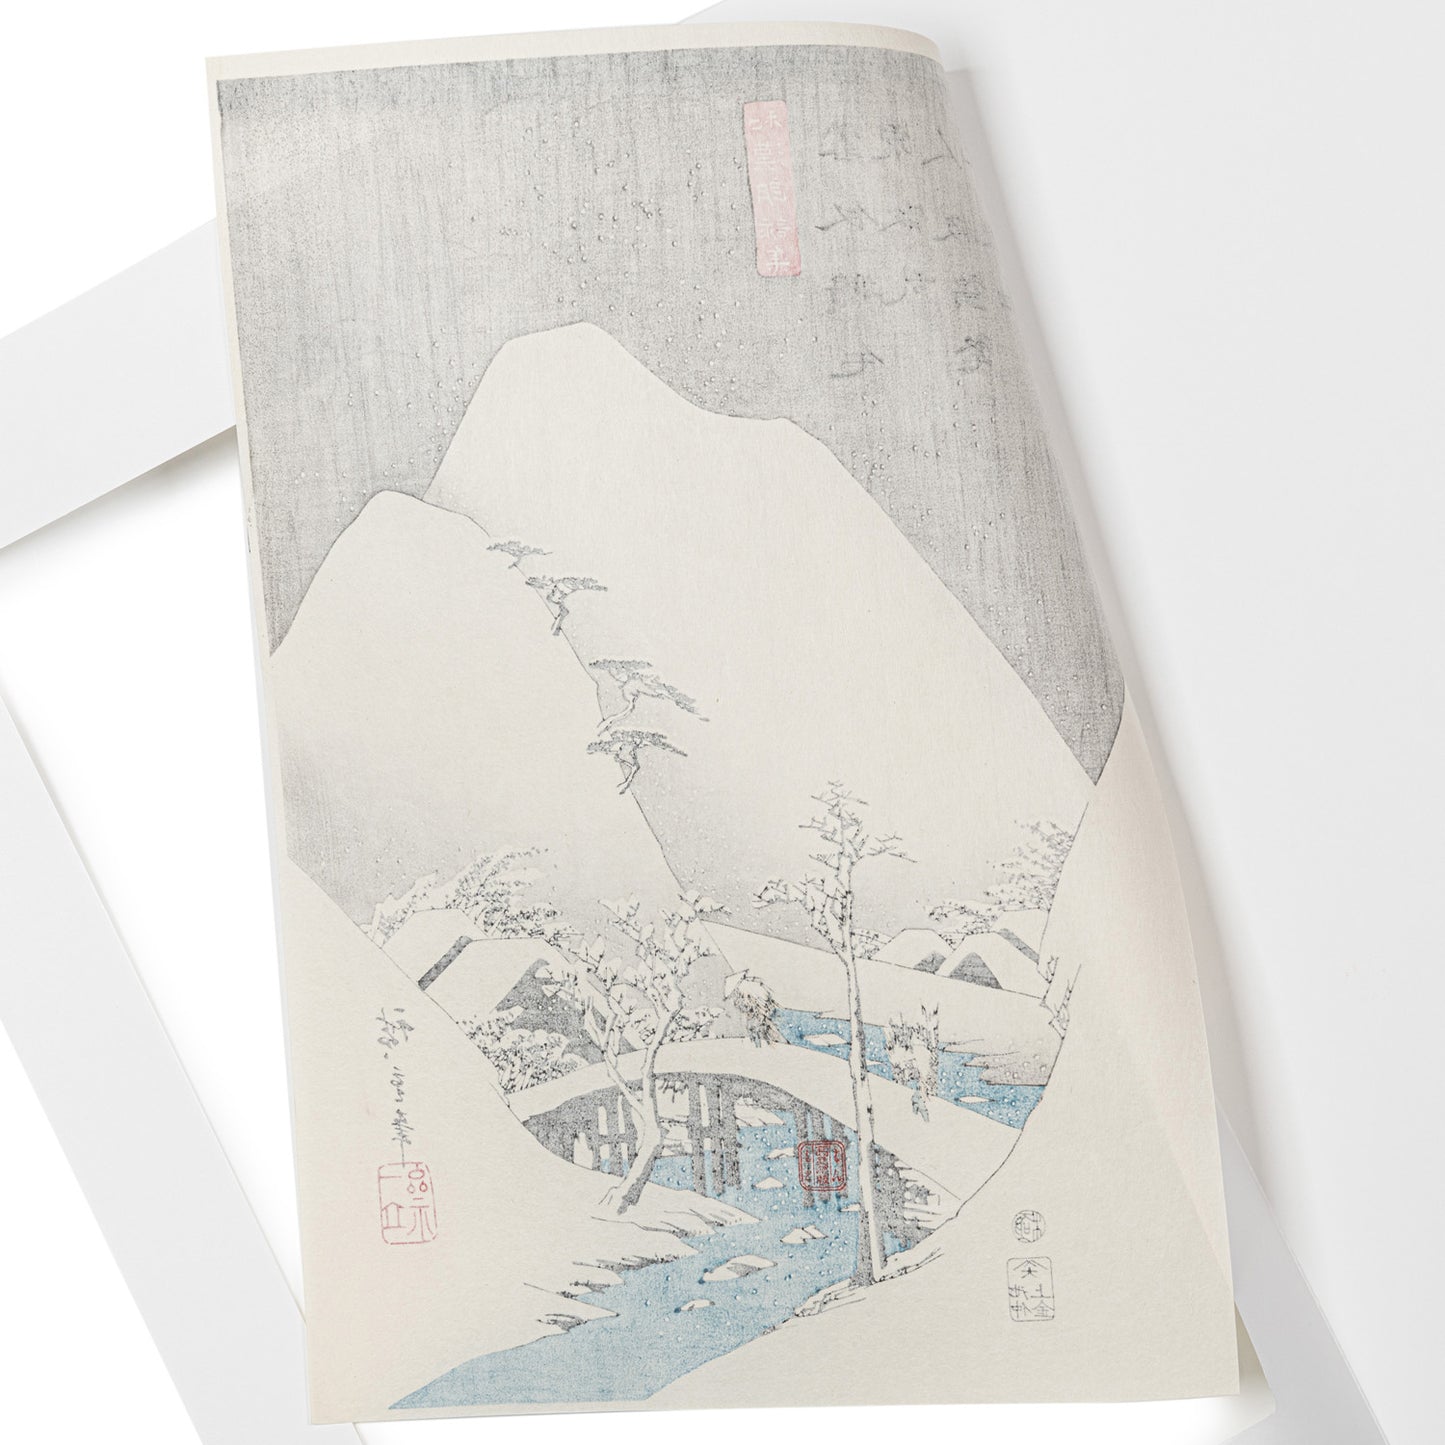 Man Crossing Bridge Japanese Woodblock Print